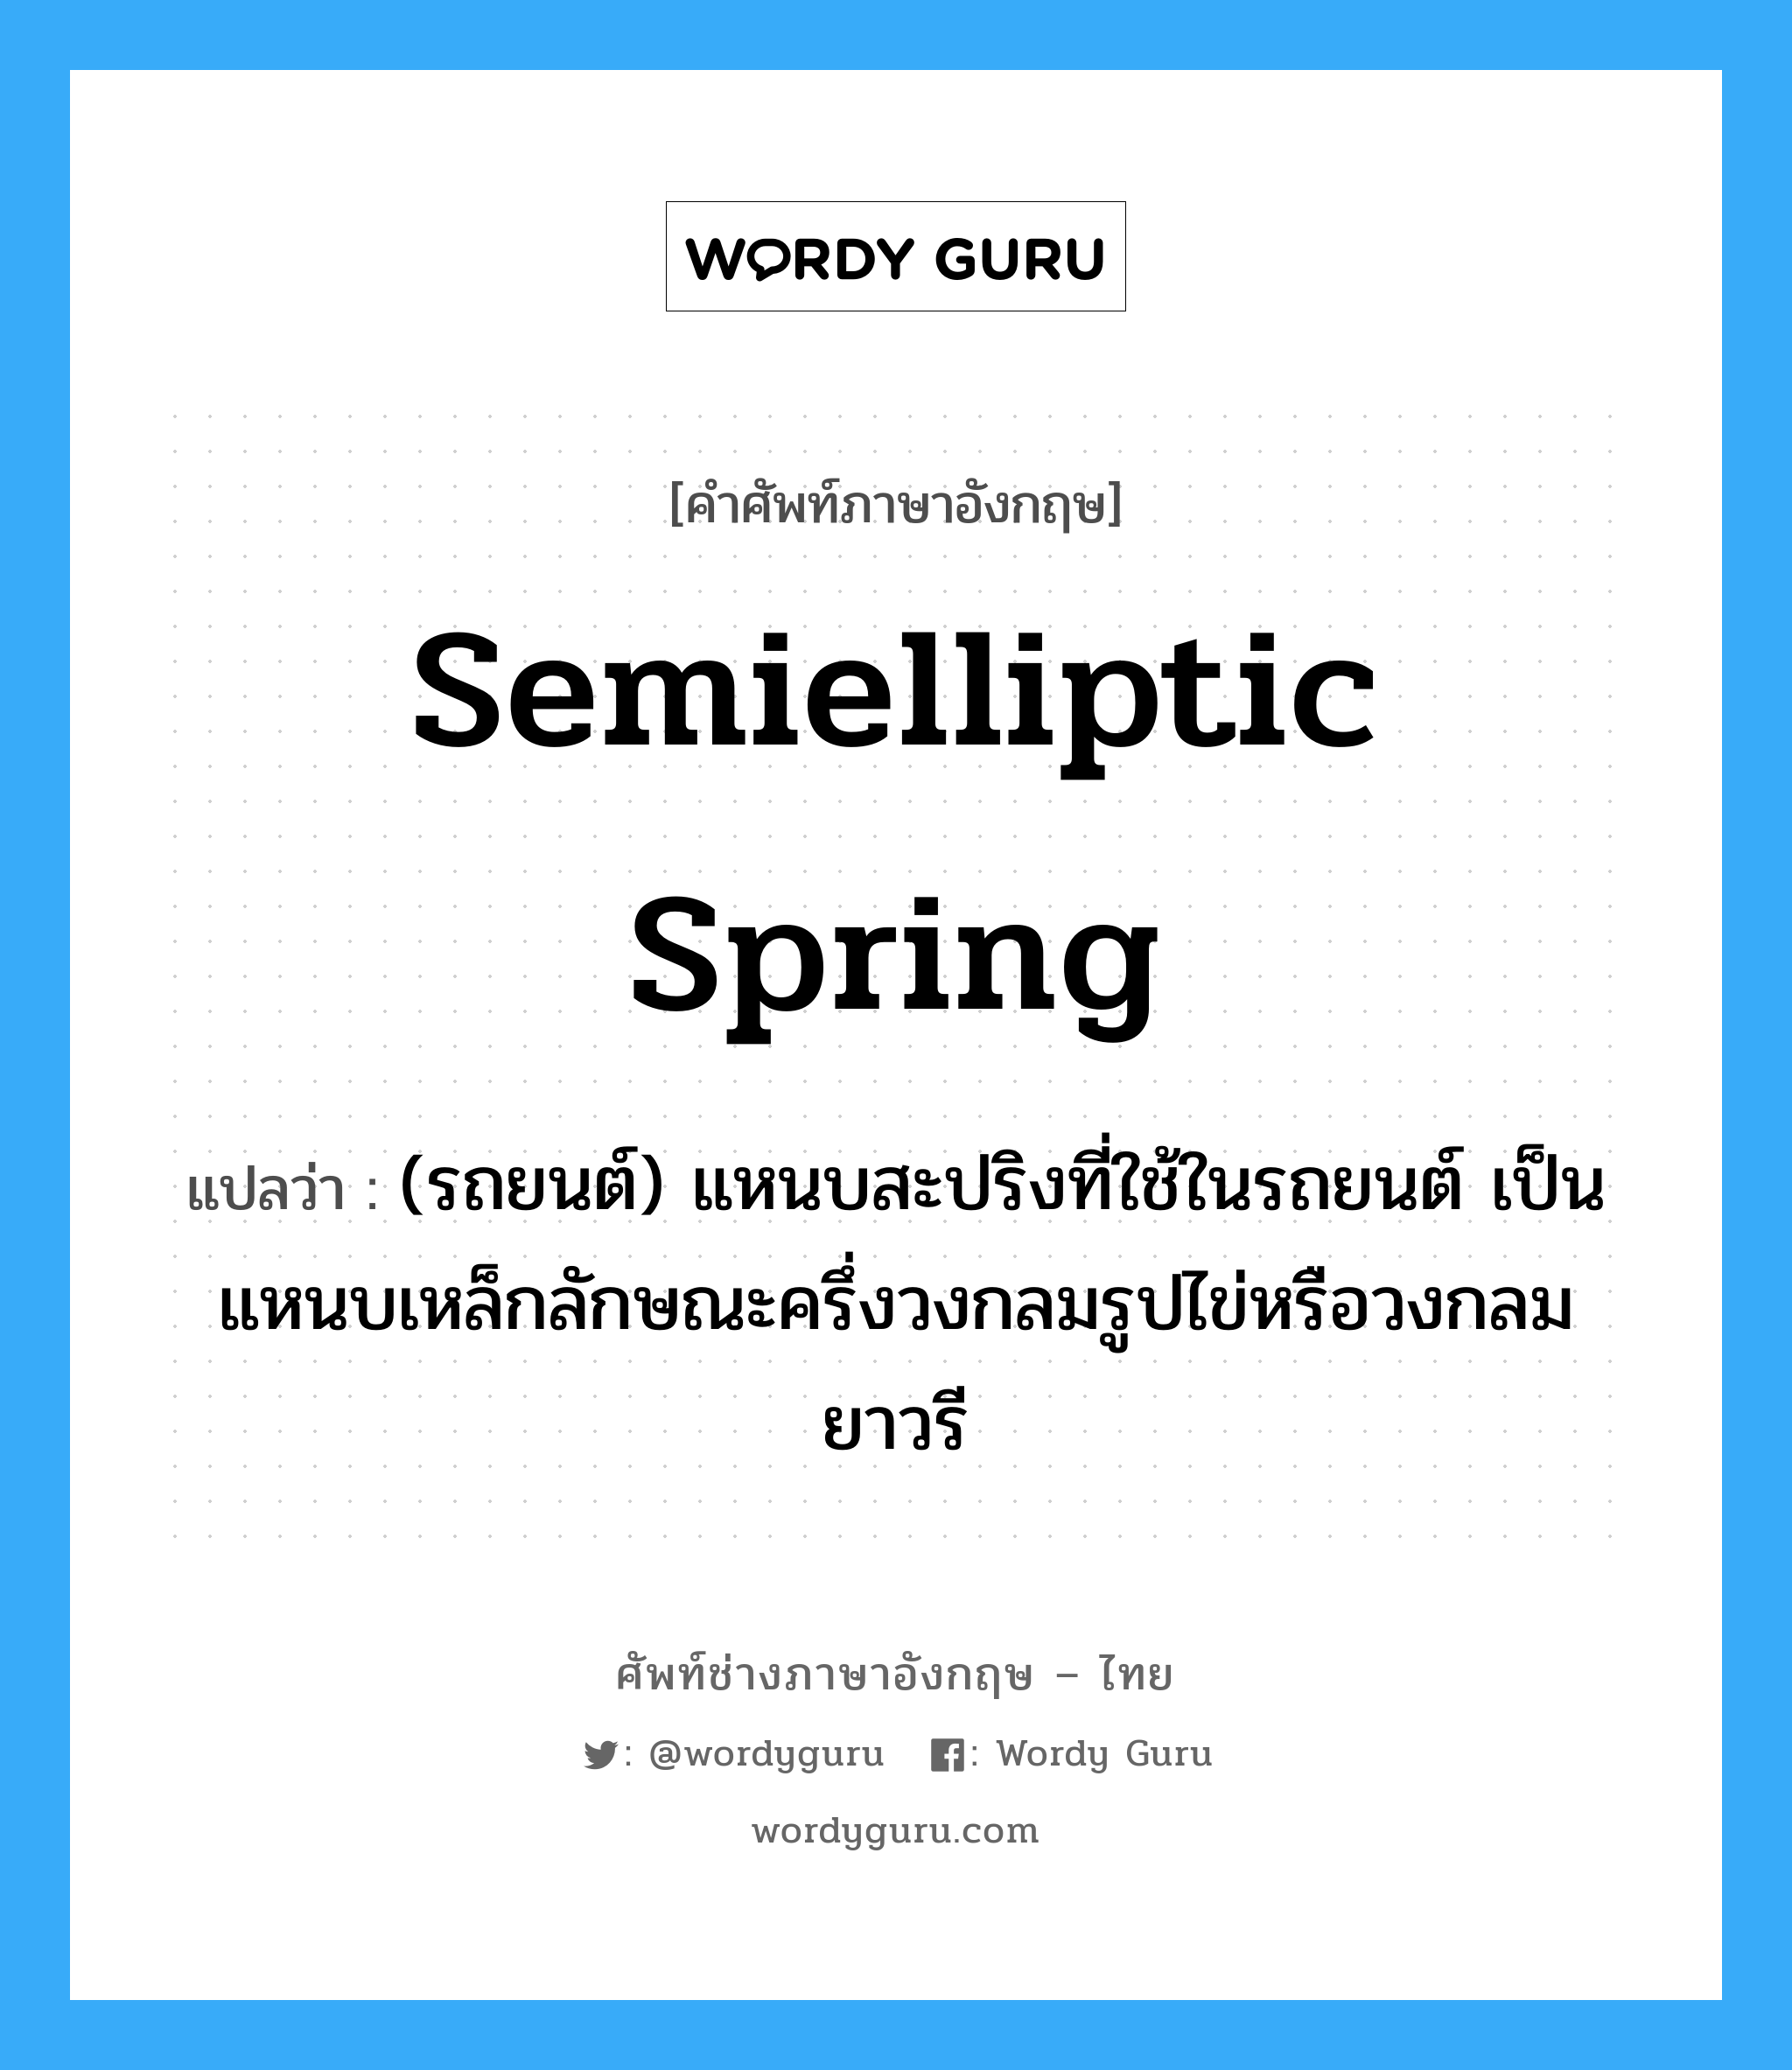 semielliptic spring แปลว่า?, คำศัพท์ช่างภาษาอังกฤษ - ไทย semielliptic spring คำศัพท์ภาษาอังกฤษ semielliptic spring แปลว่า (รถยนต์) แหนบสะปริงที่ใช้ในรถยนต์ เป็นแหนบเหล็กลักษณะครึ่งวงกลมรูปไข่หรือวงกลมยาวรี